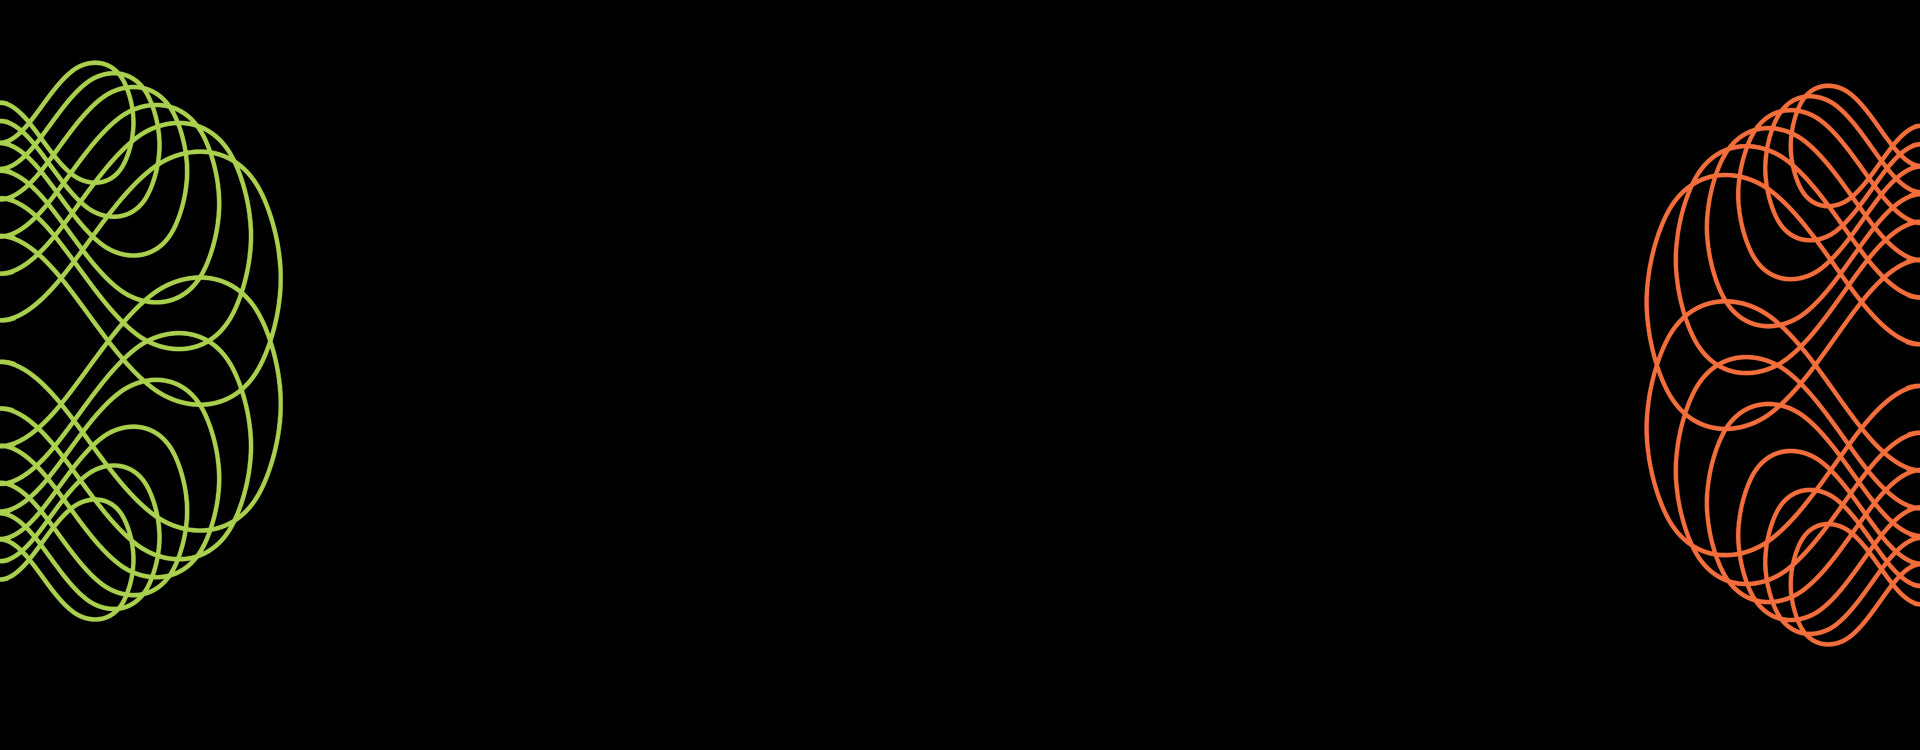 Moonwalkr Background logo Image